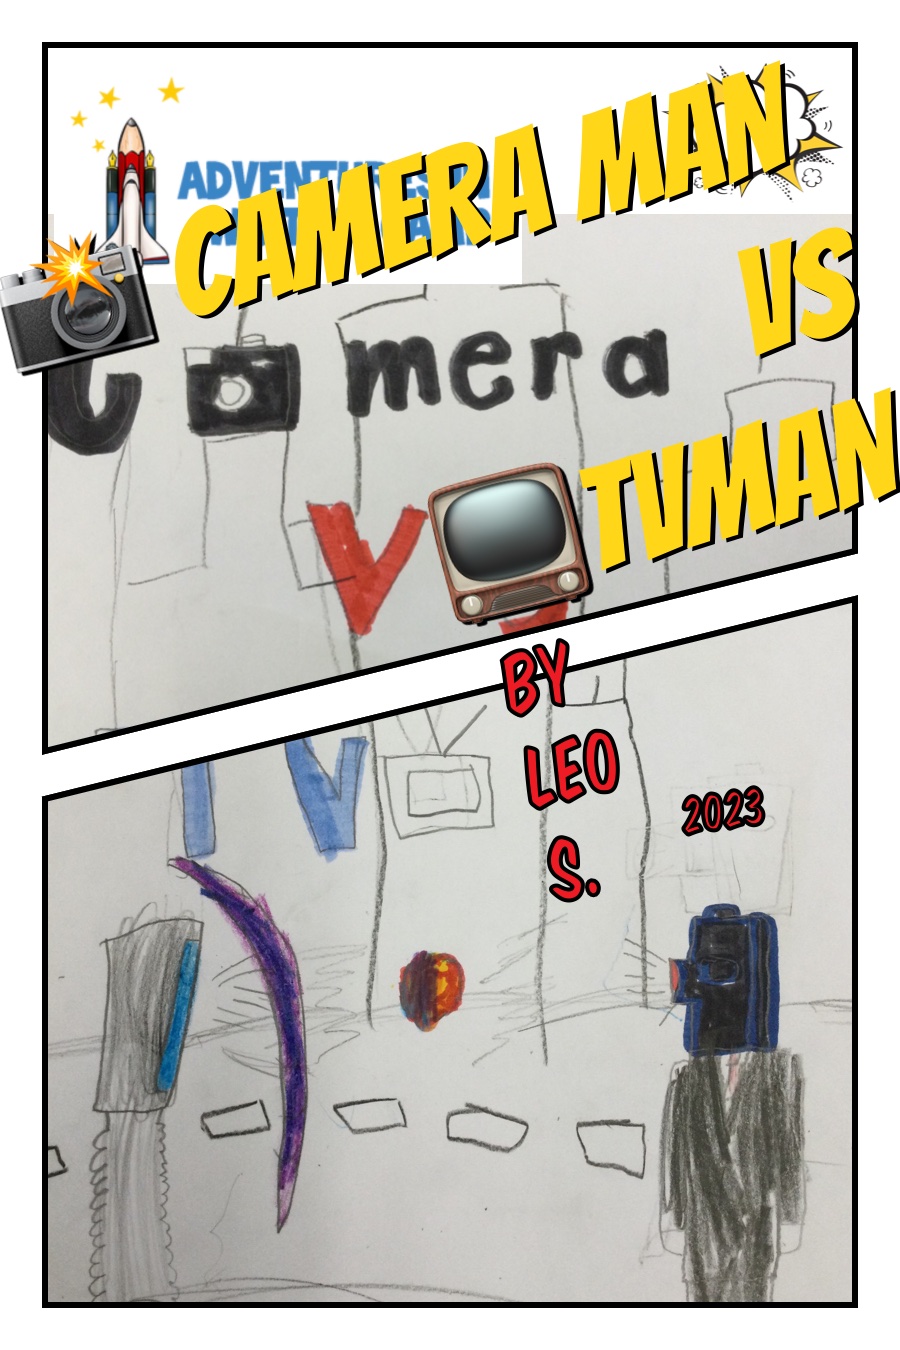 Camera Man VS TV Man by Leonardo Leo S.